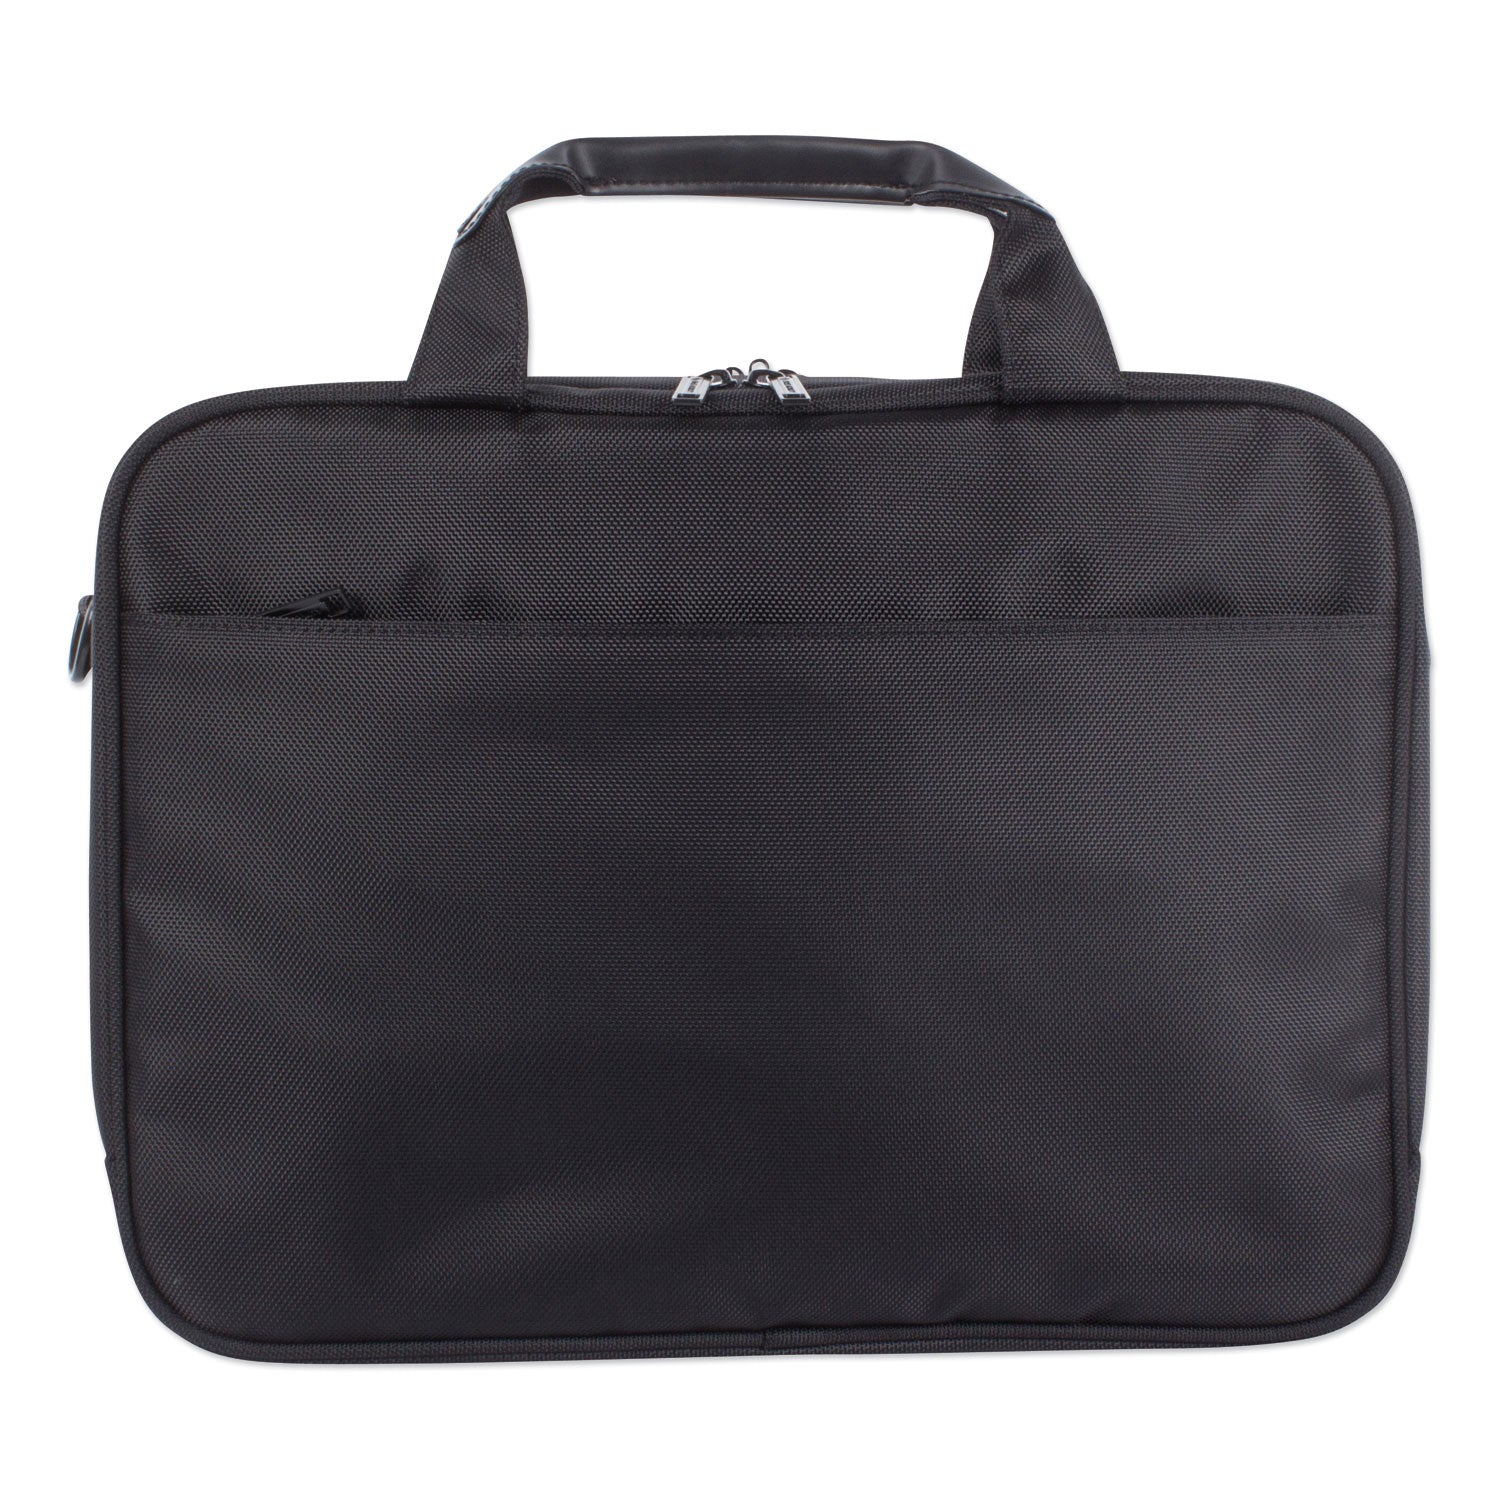 purpose-executive-briefcase-fits-devices-up-to-156-nylon-35-x-35-x-12-black_swzexb1005smbk - 2